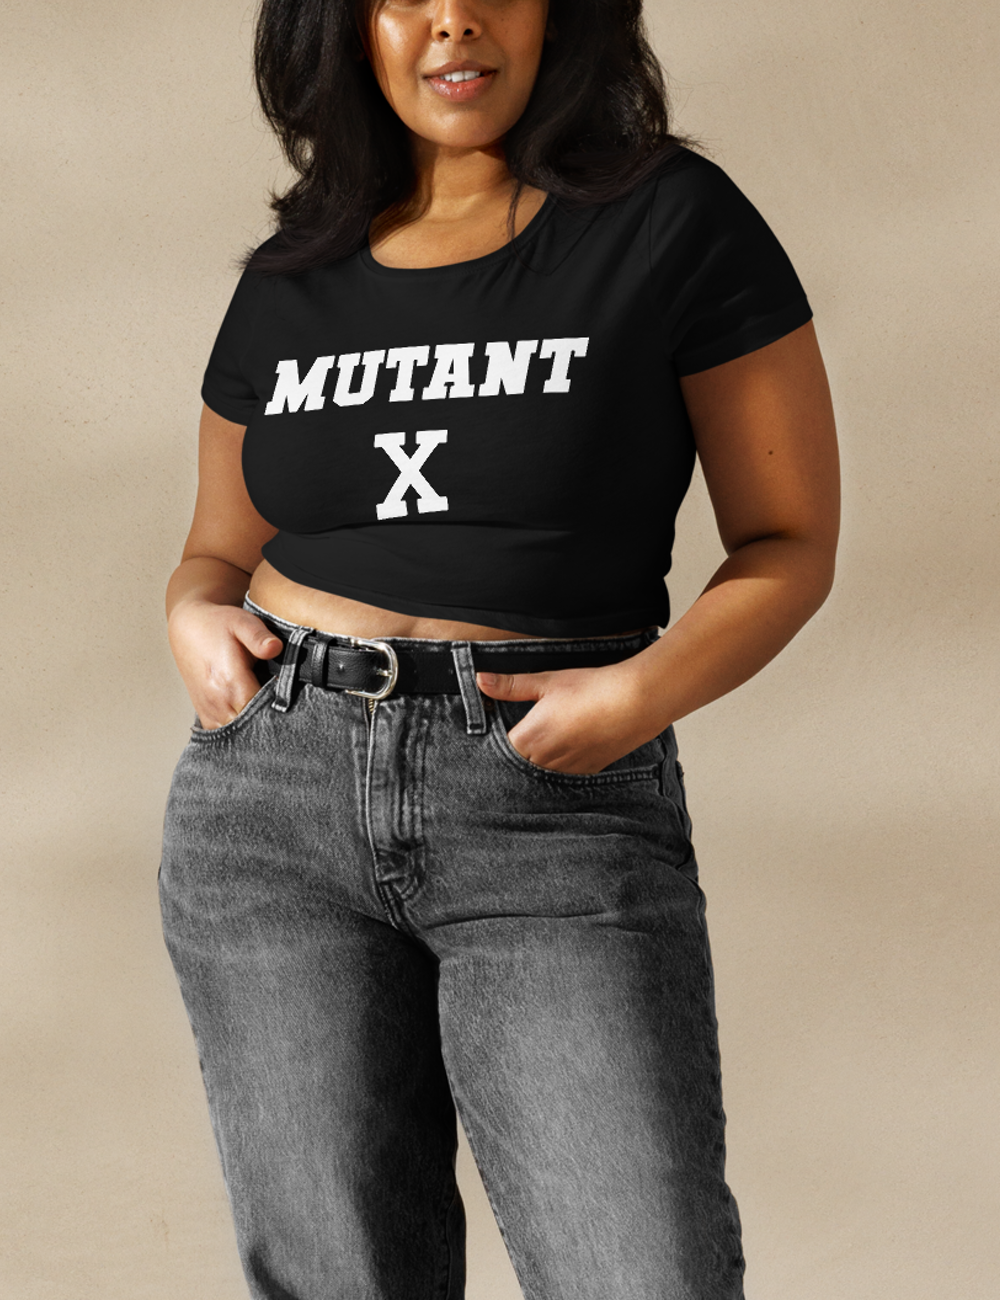 Mutant X Women's Fitted Crop Top T-Shirt OniTakai